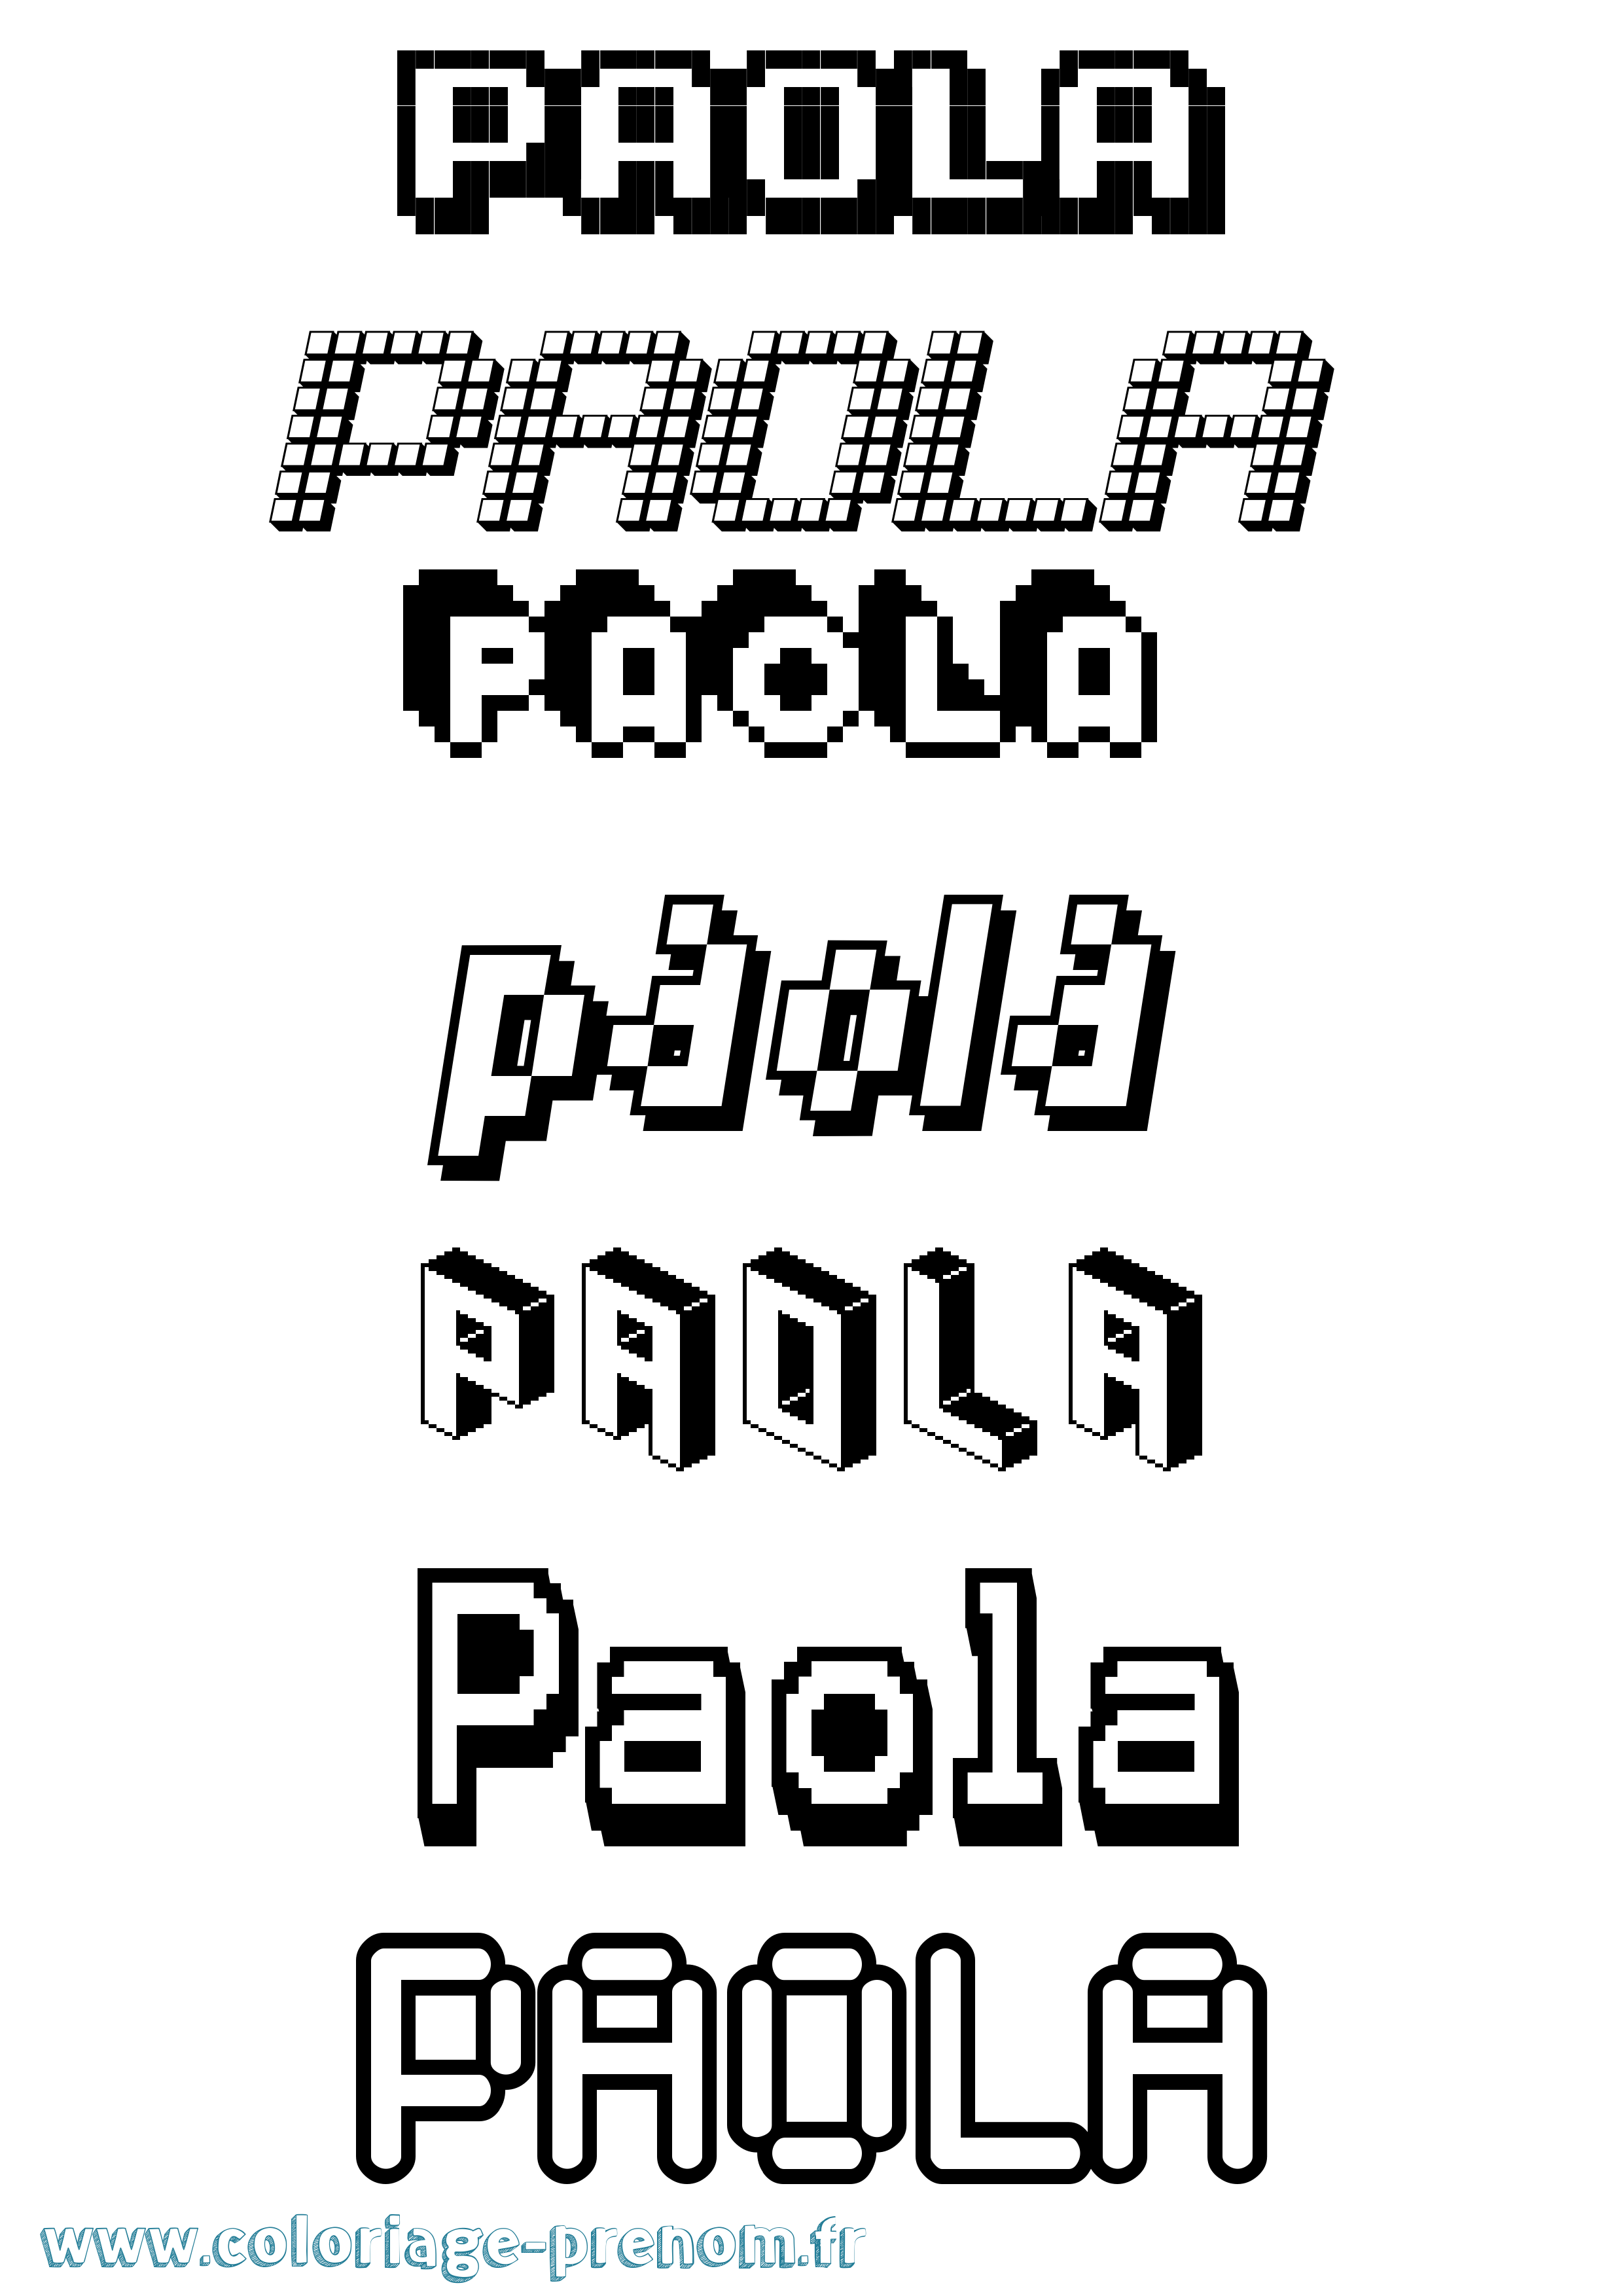 Coloriage prénom Paola